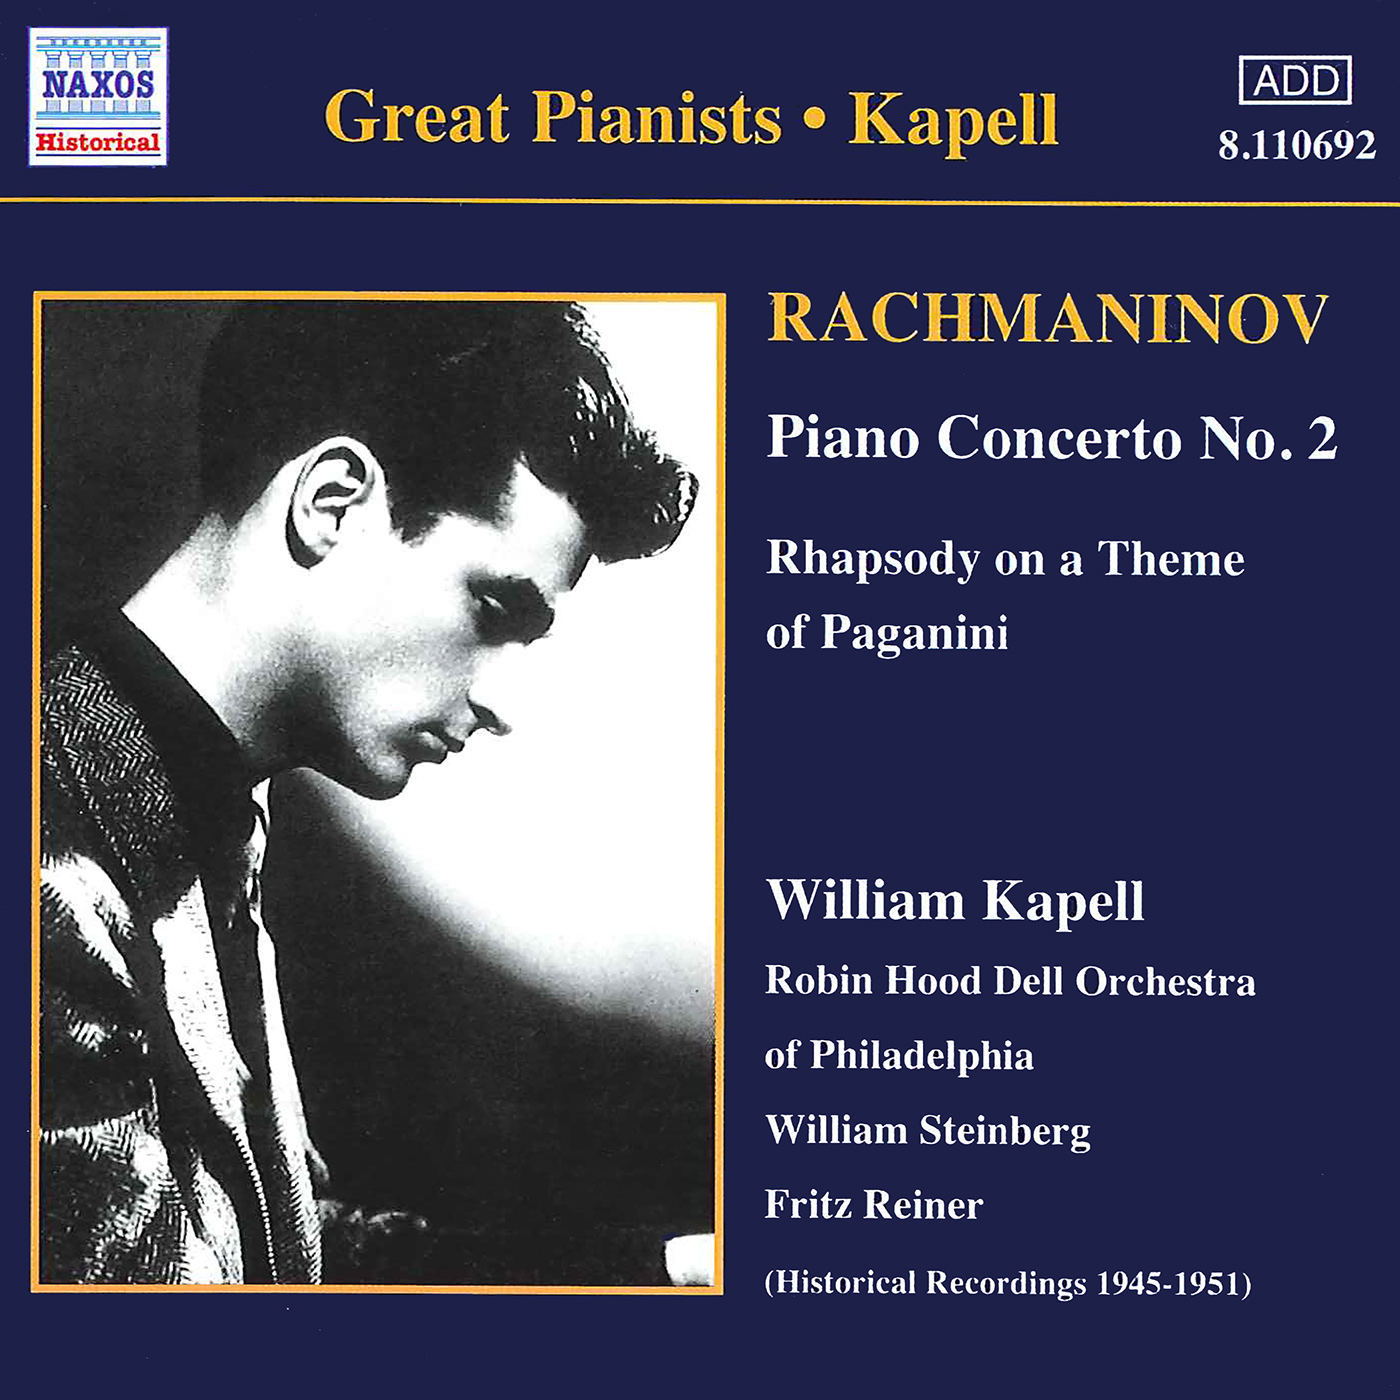 RACHMANINOV: Piano Concerto No. 2 / Rhapsody on a Theme of Paganini (Kapell) (1950-1951)